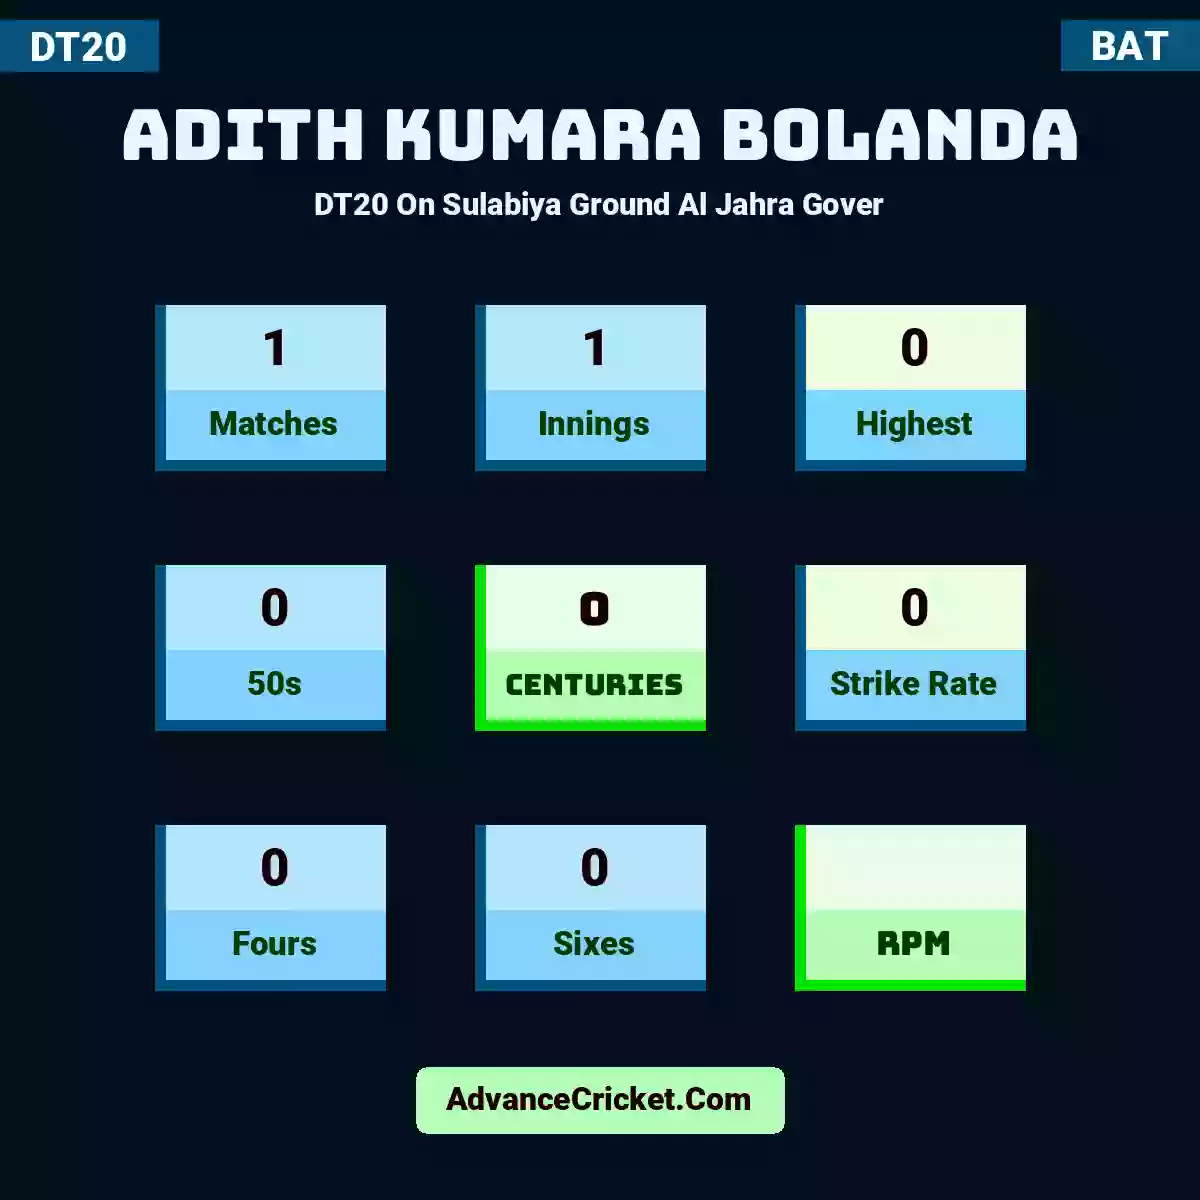 Adith Kumara Bolanda DT20  On Sulabiya Ground Al Jahra Gover, Adith Kumara Bolanda played 1 matches, scored 0 runs as highest, 0 half-centuries, and 0 centuries, with a strike rate of 0. A.Kumara.Bolanda hit 0 fours and 0 sixes.